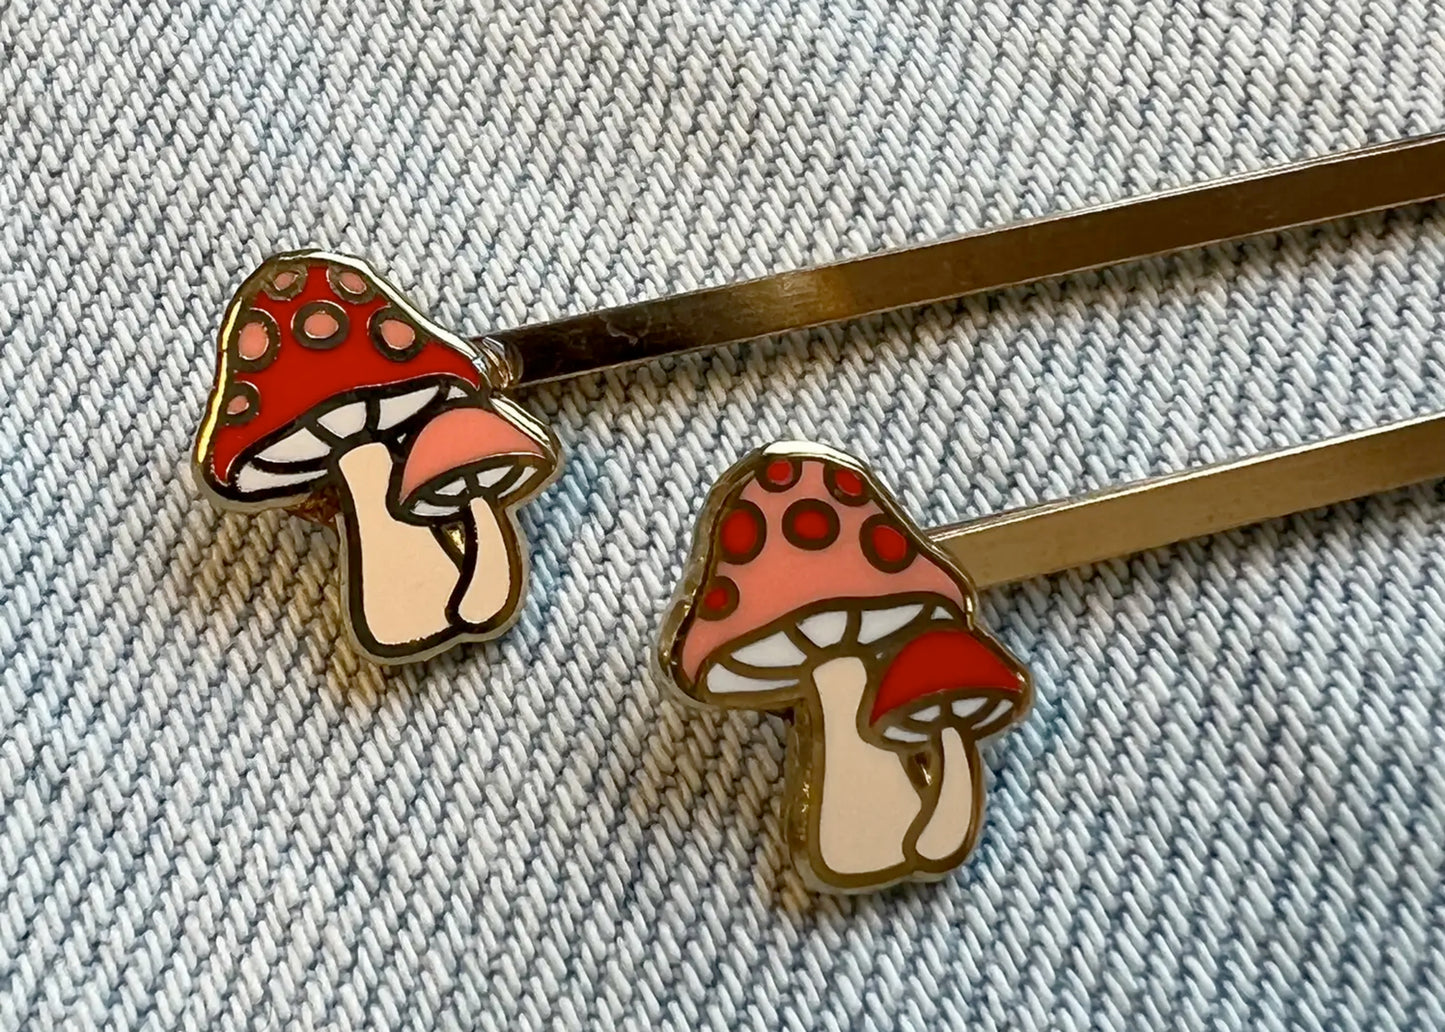 Mushroom Bobby Pin Set in Classic Red